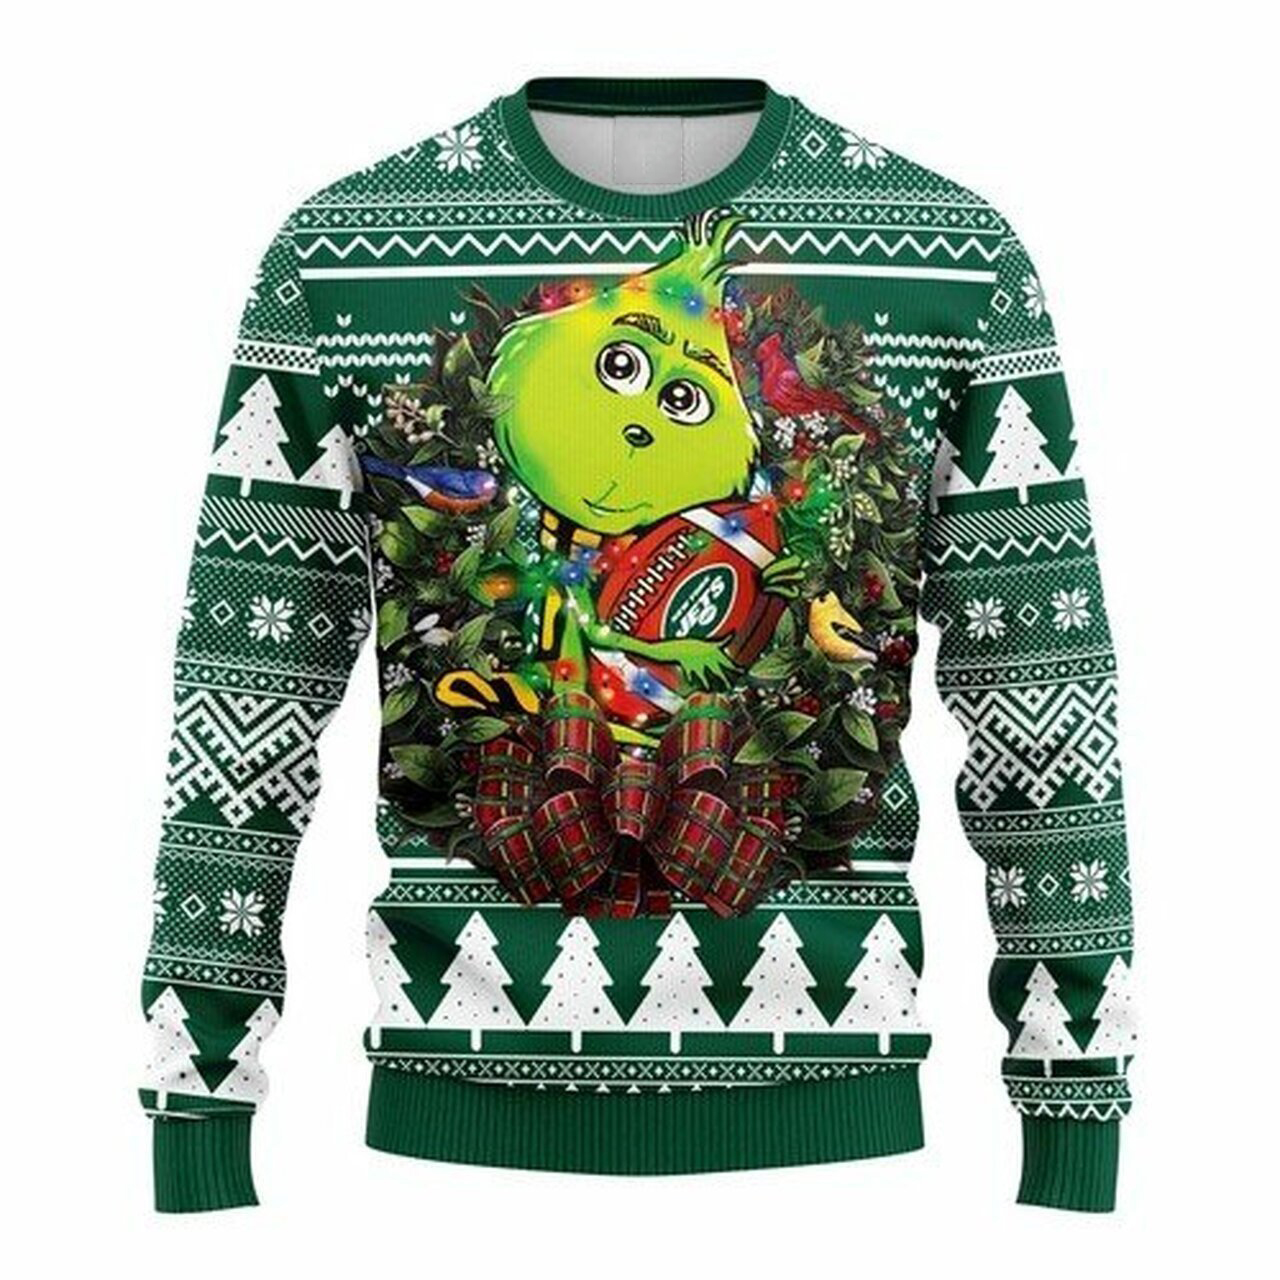 NFL New York Jets Grinch hug ugly christmas sweater